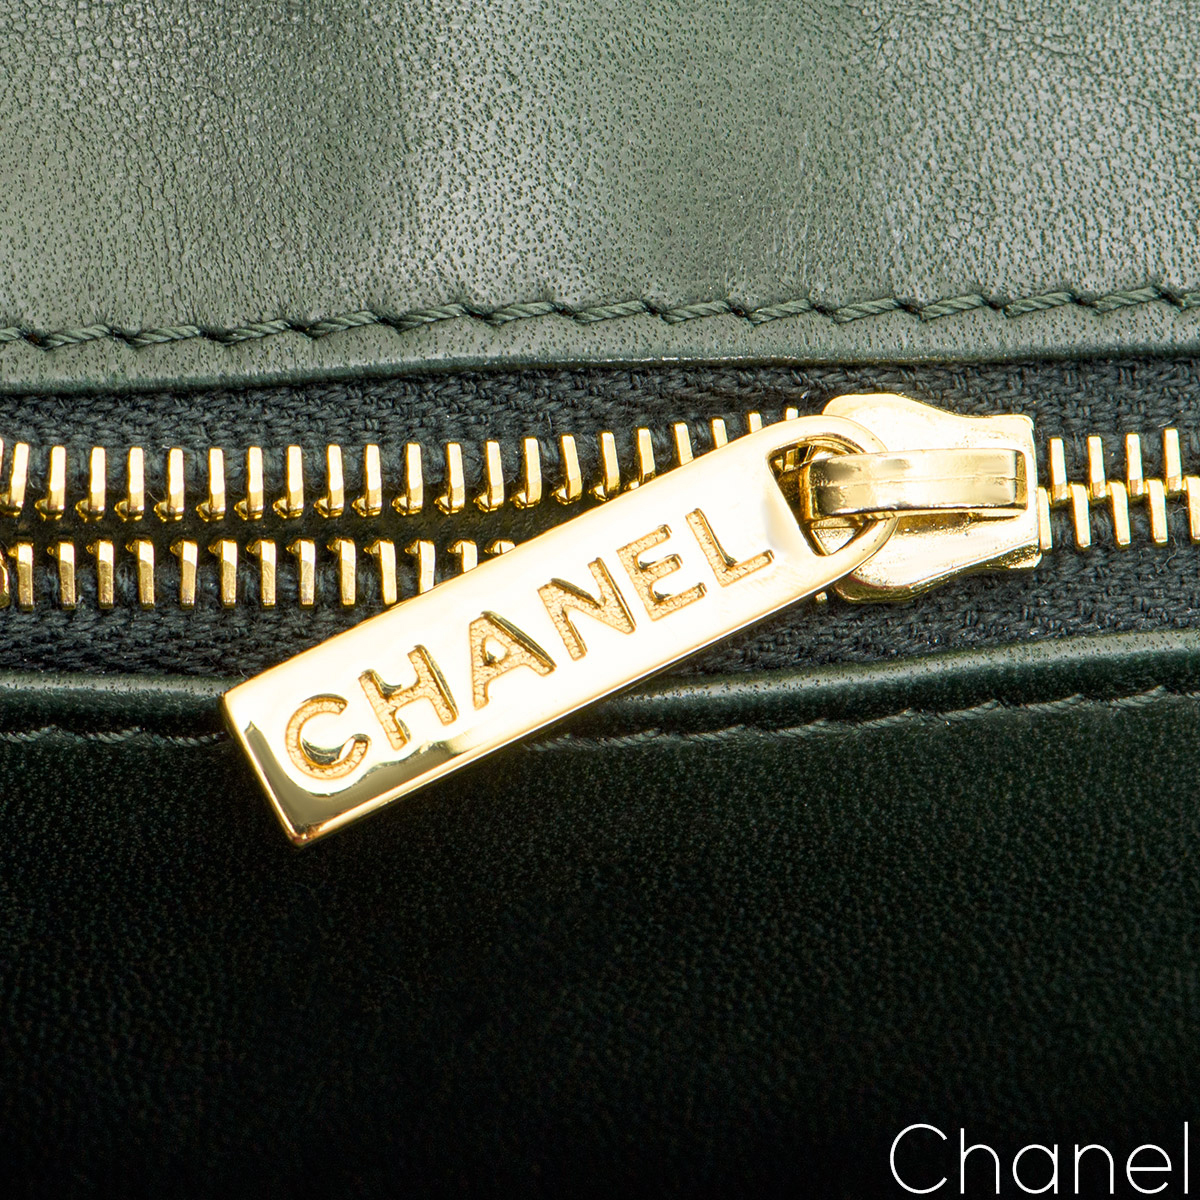 Chanel Green Alligator Jumbo Classic Flap Bag